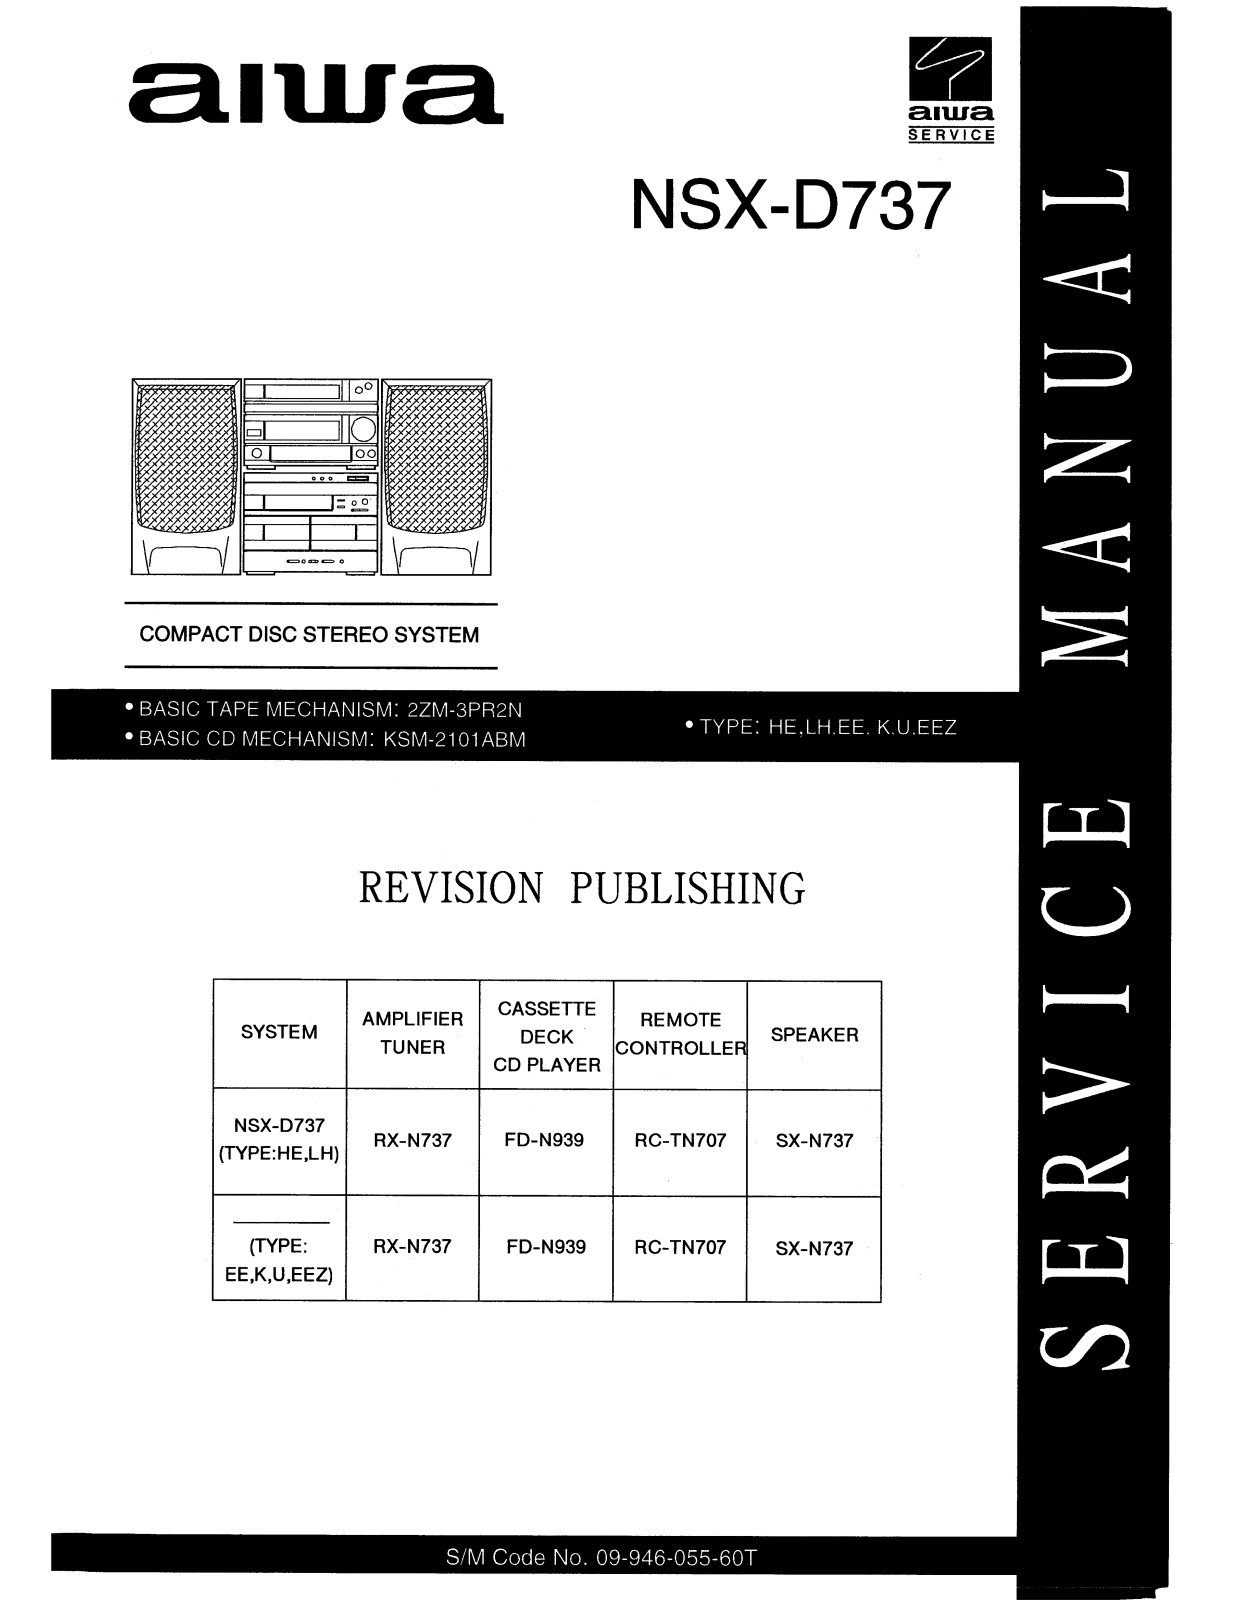 Aiwa nsx-d737 User Manual